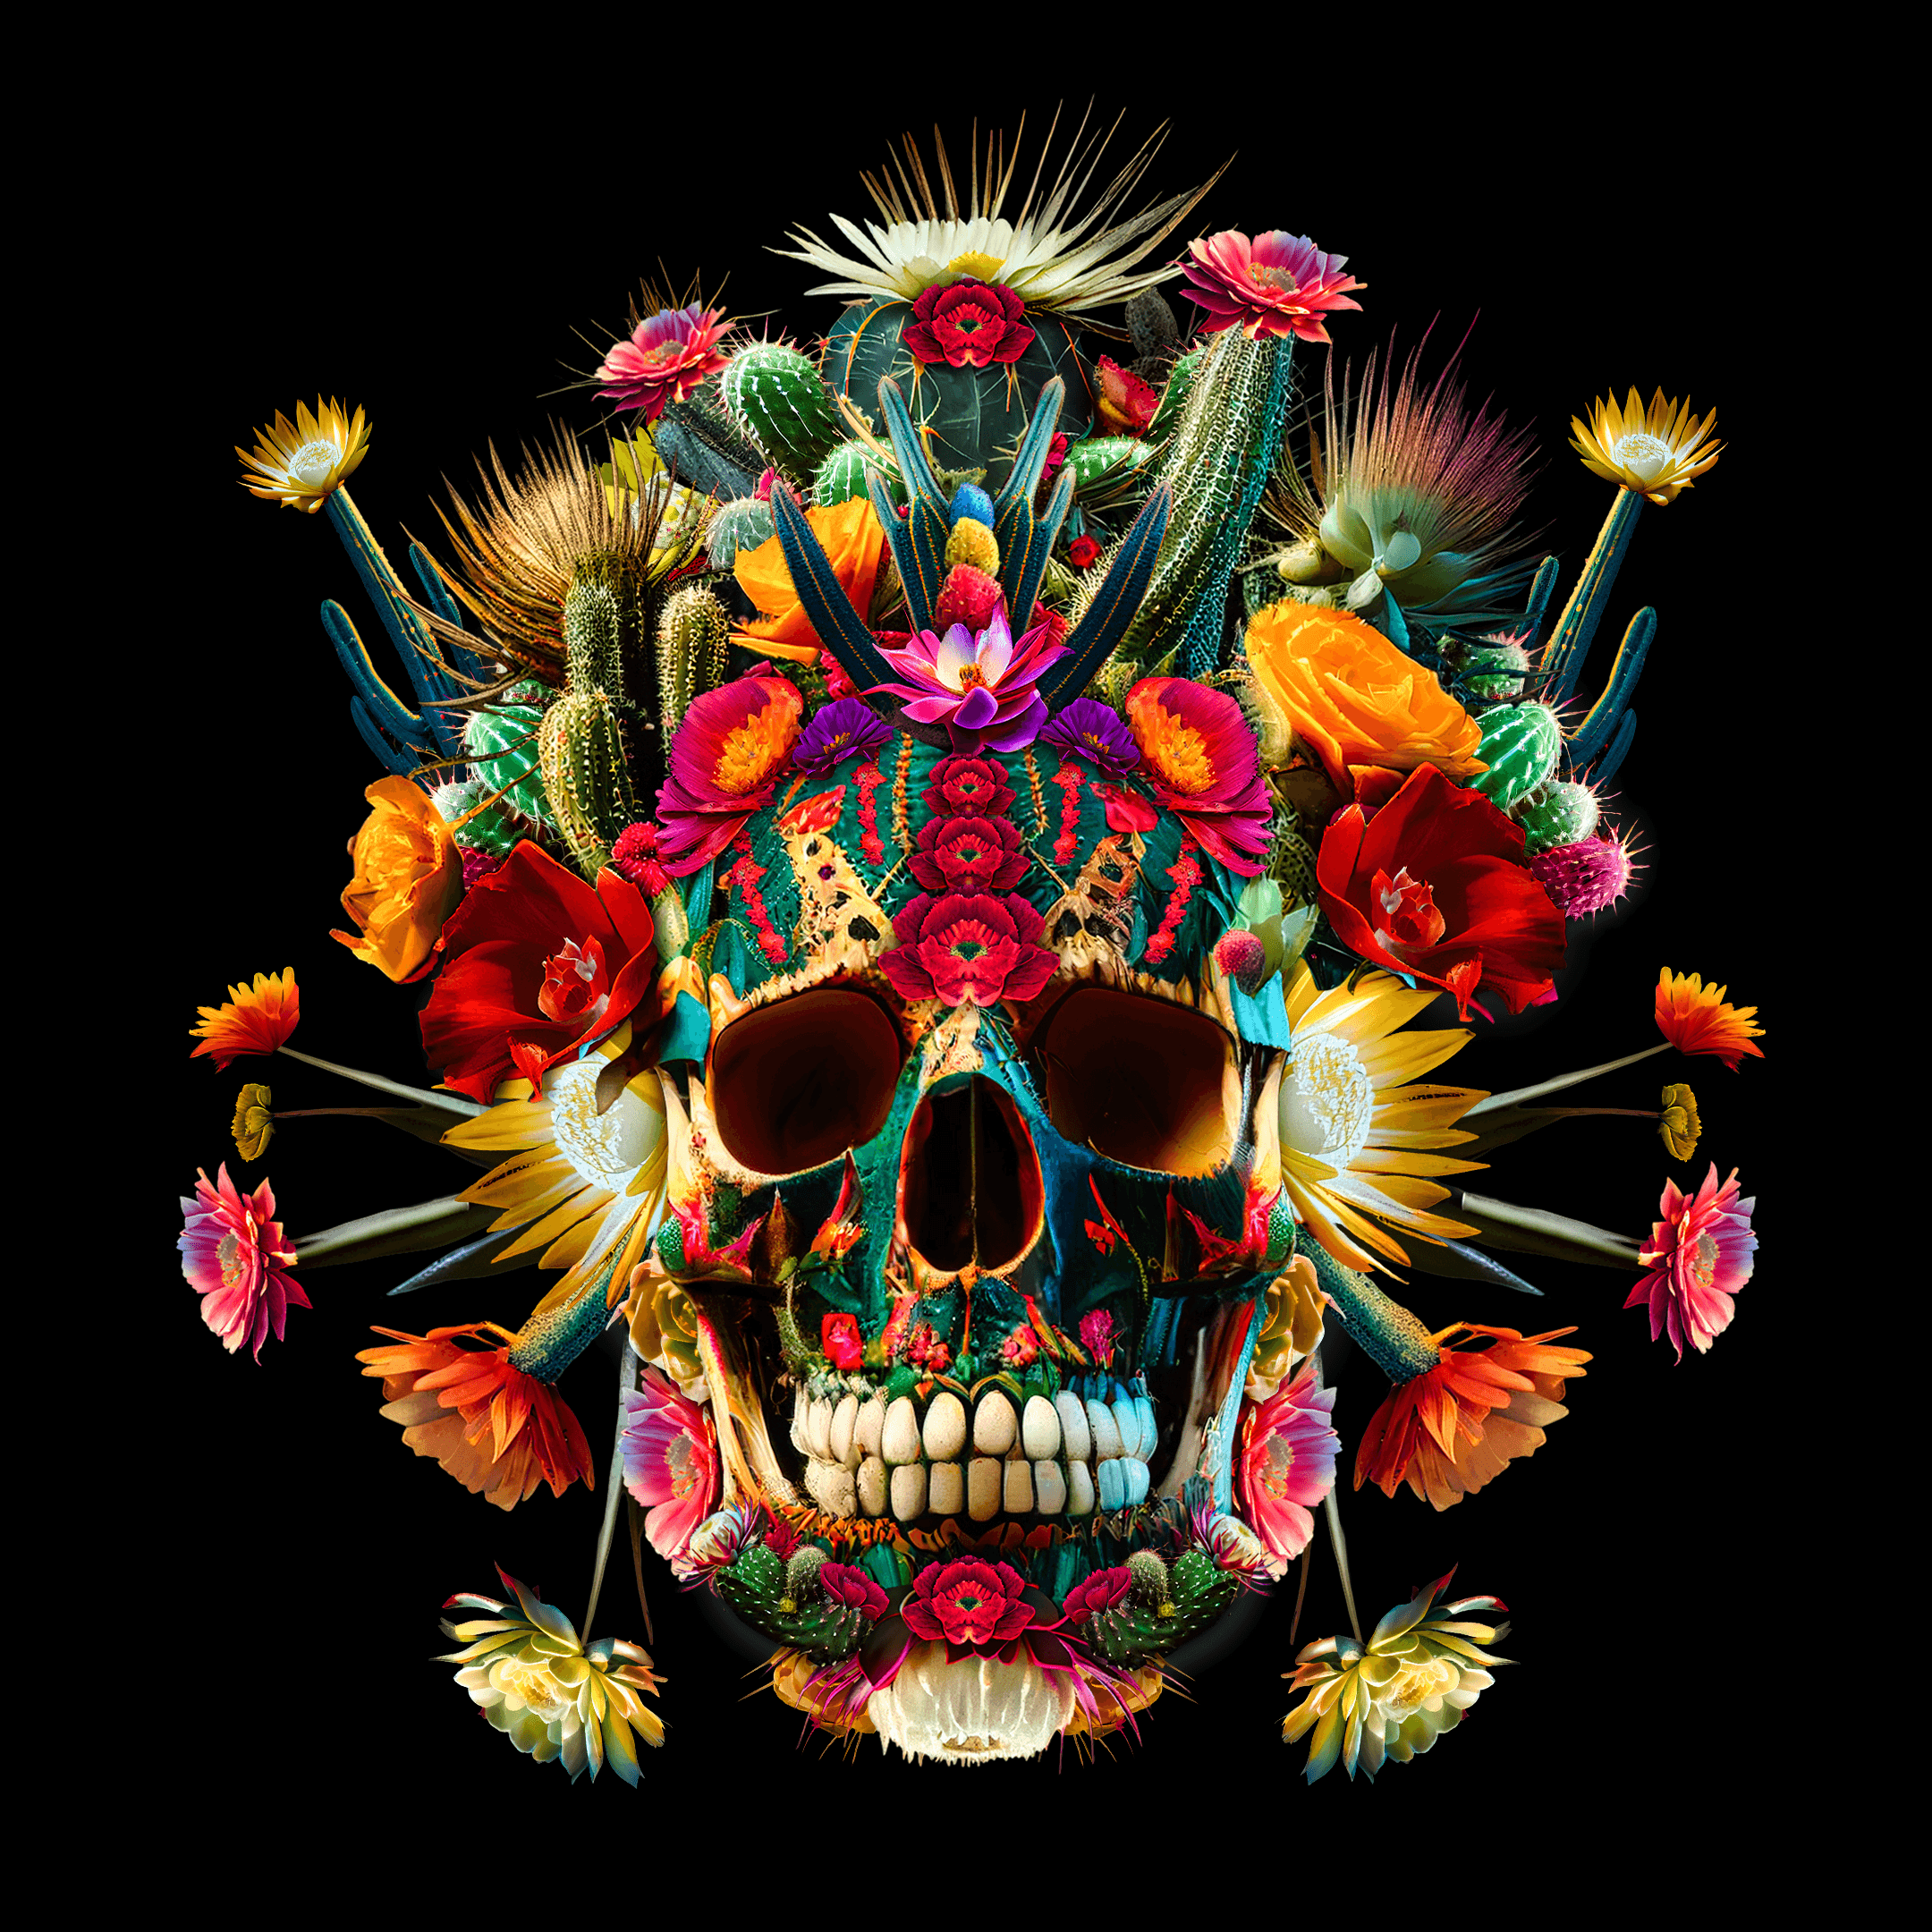 The Art of Skulls 13